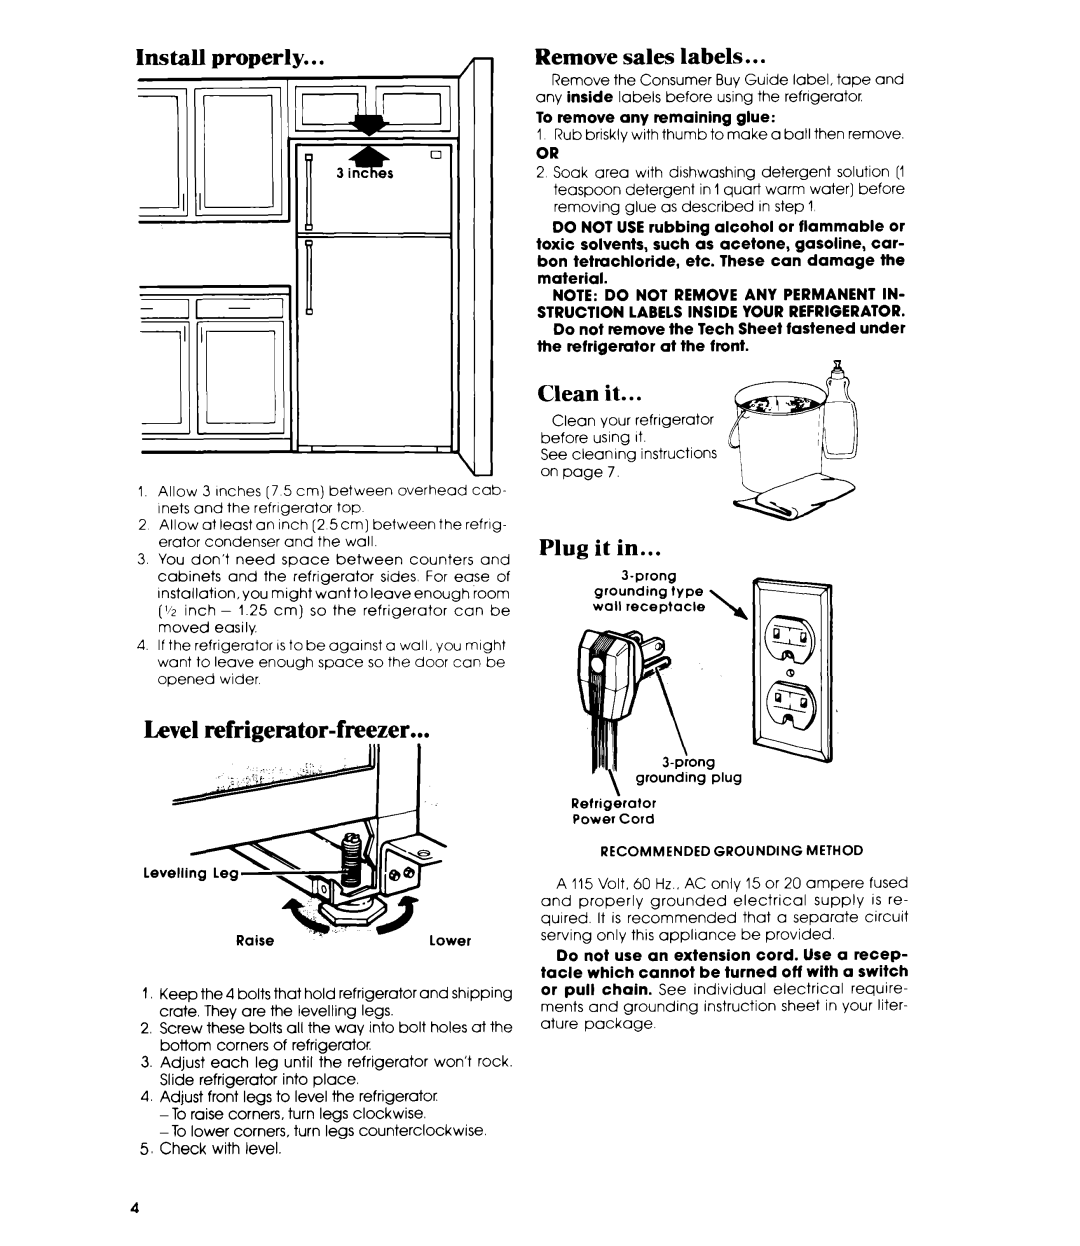 Whirlpool ETl2EC manual Level refrigerator-freezer, Install, properly, Remove, sales, labels, Clean, Plug it in 